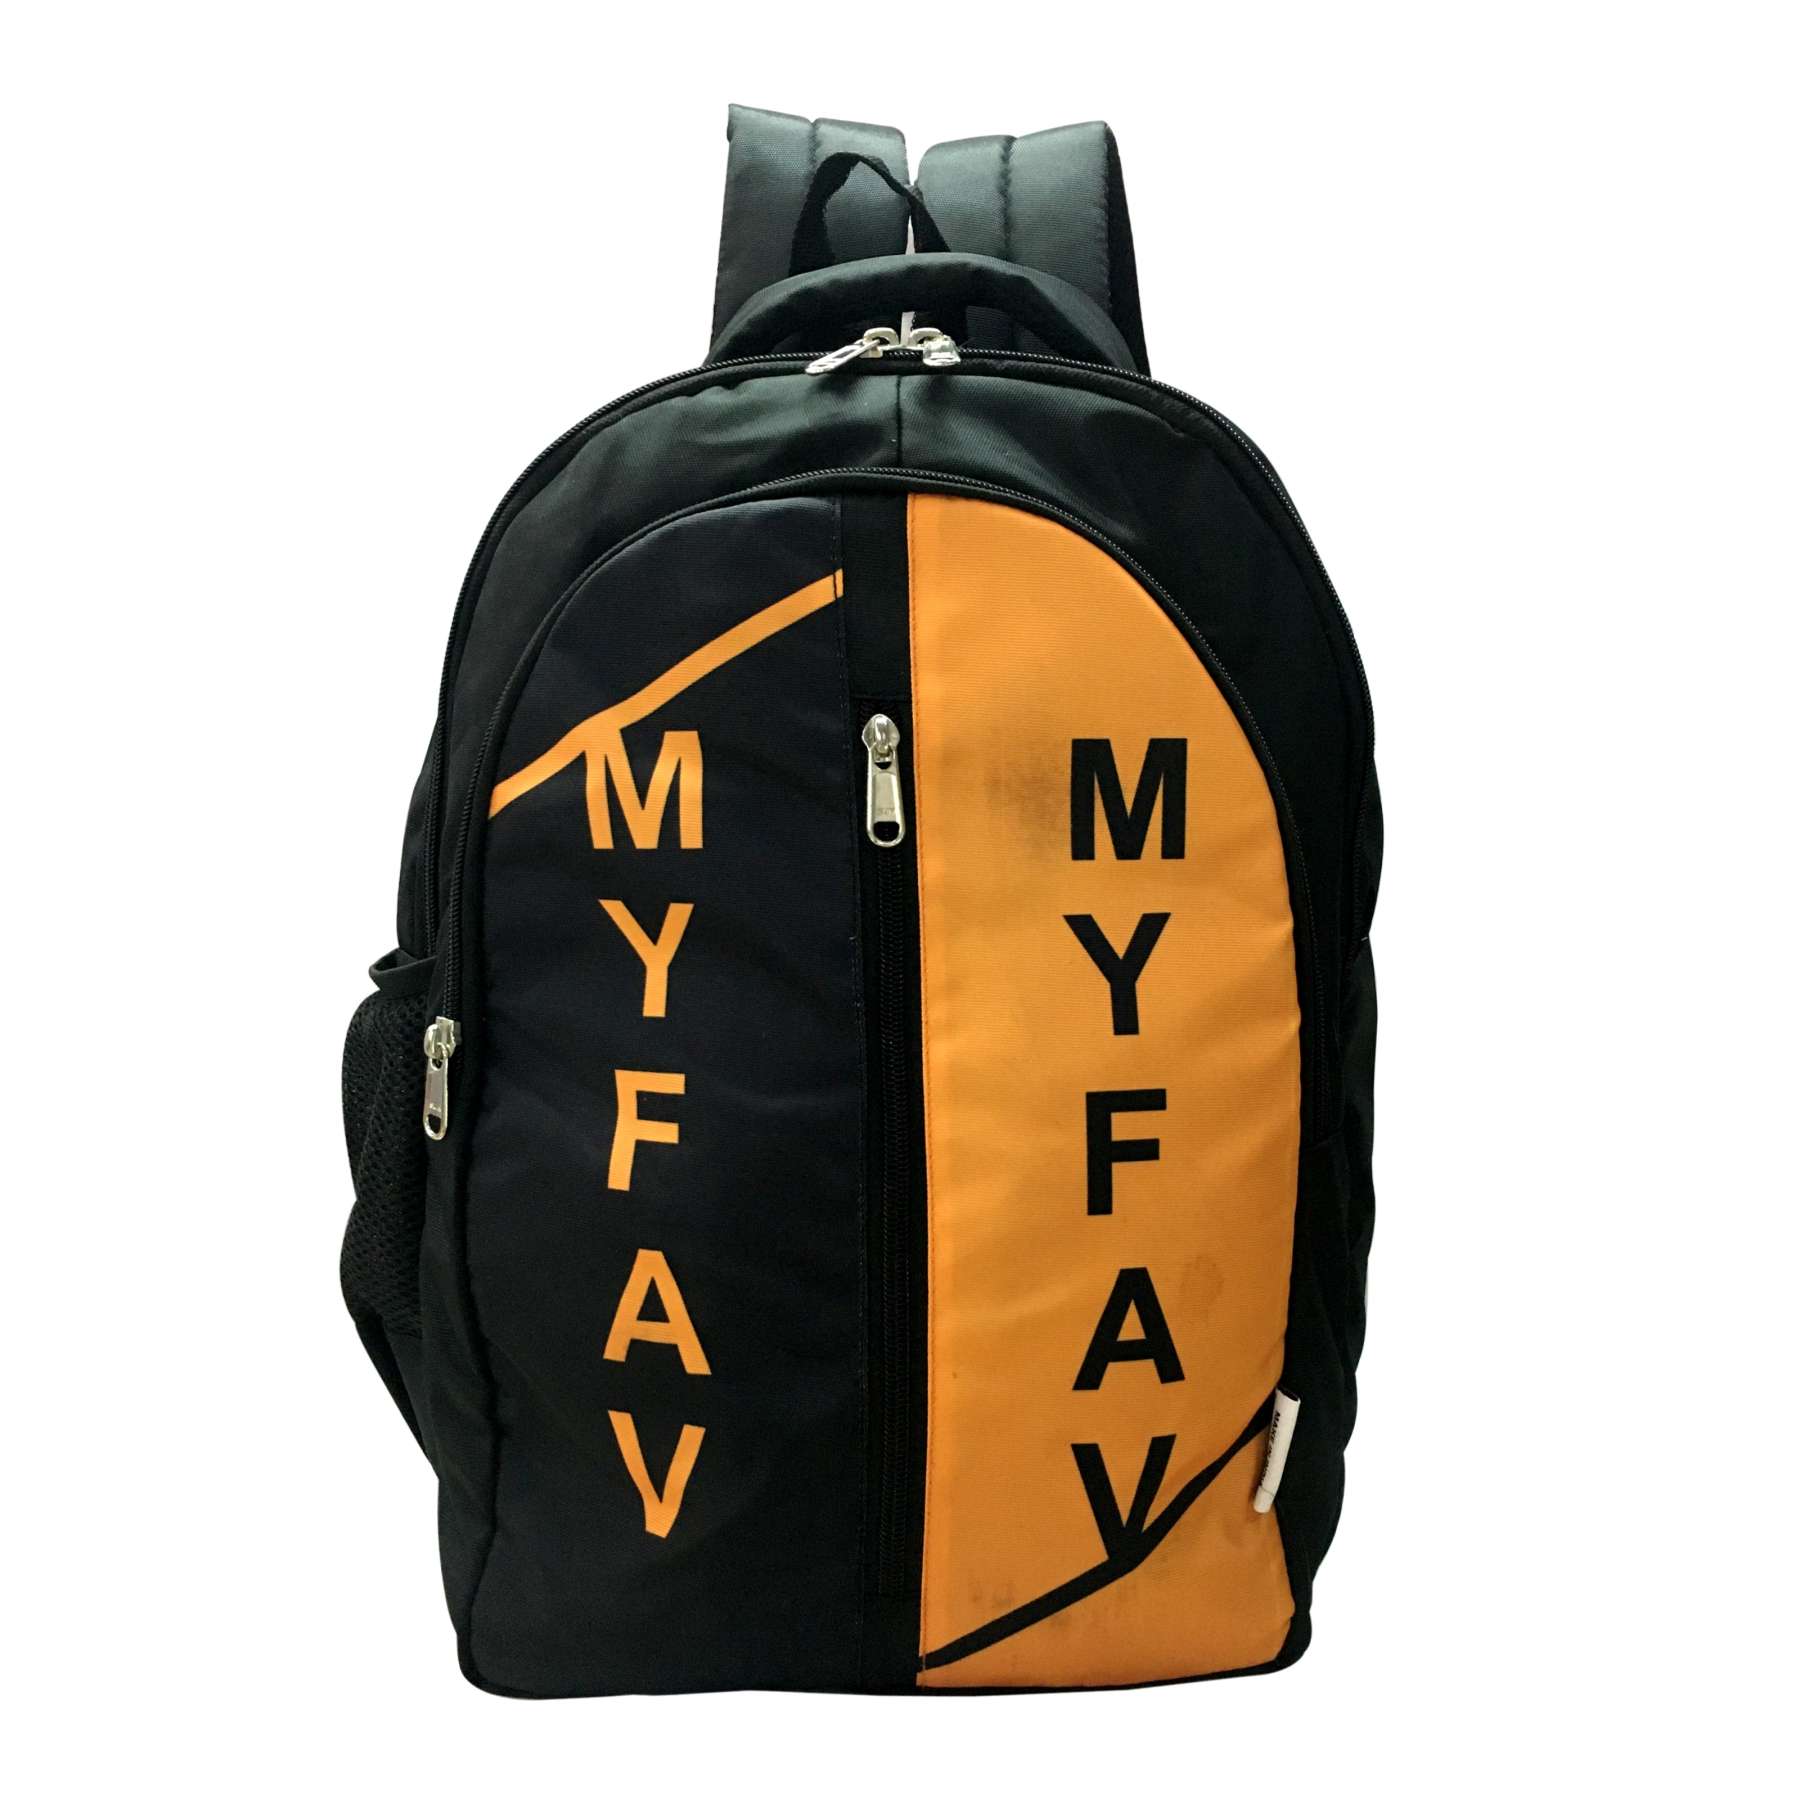 Orange Black Laptop Backpack for Office / School / Travel